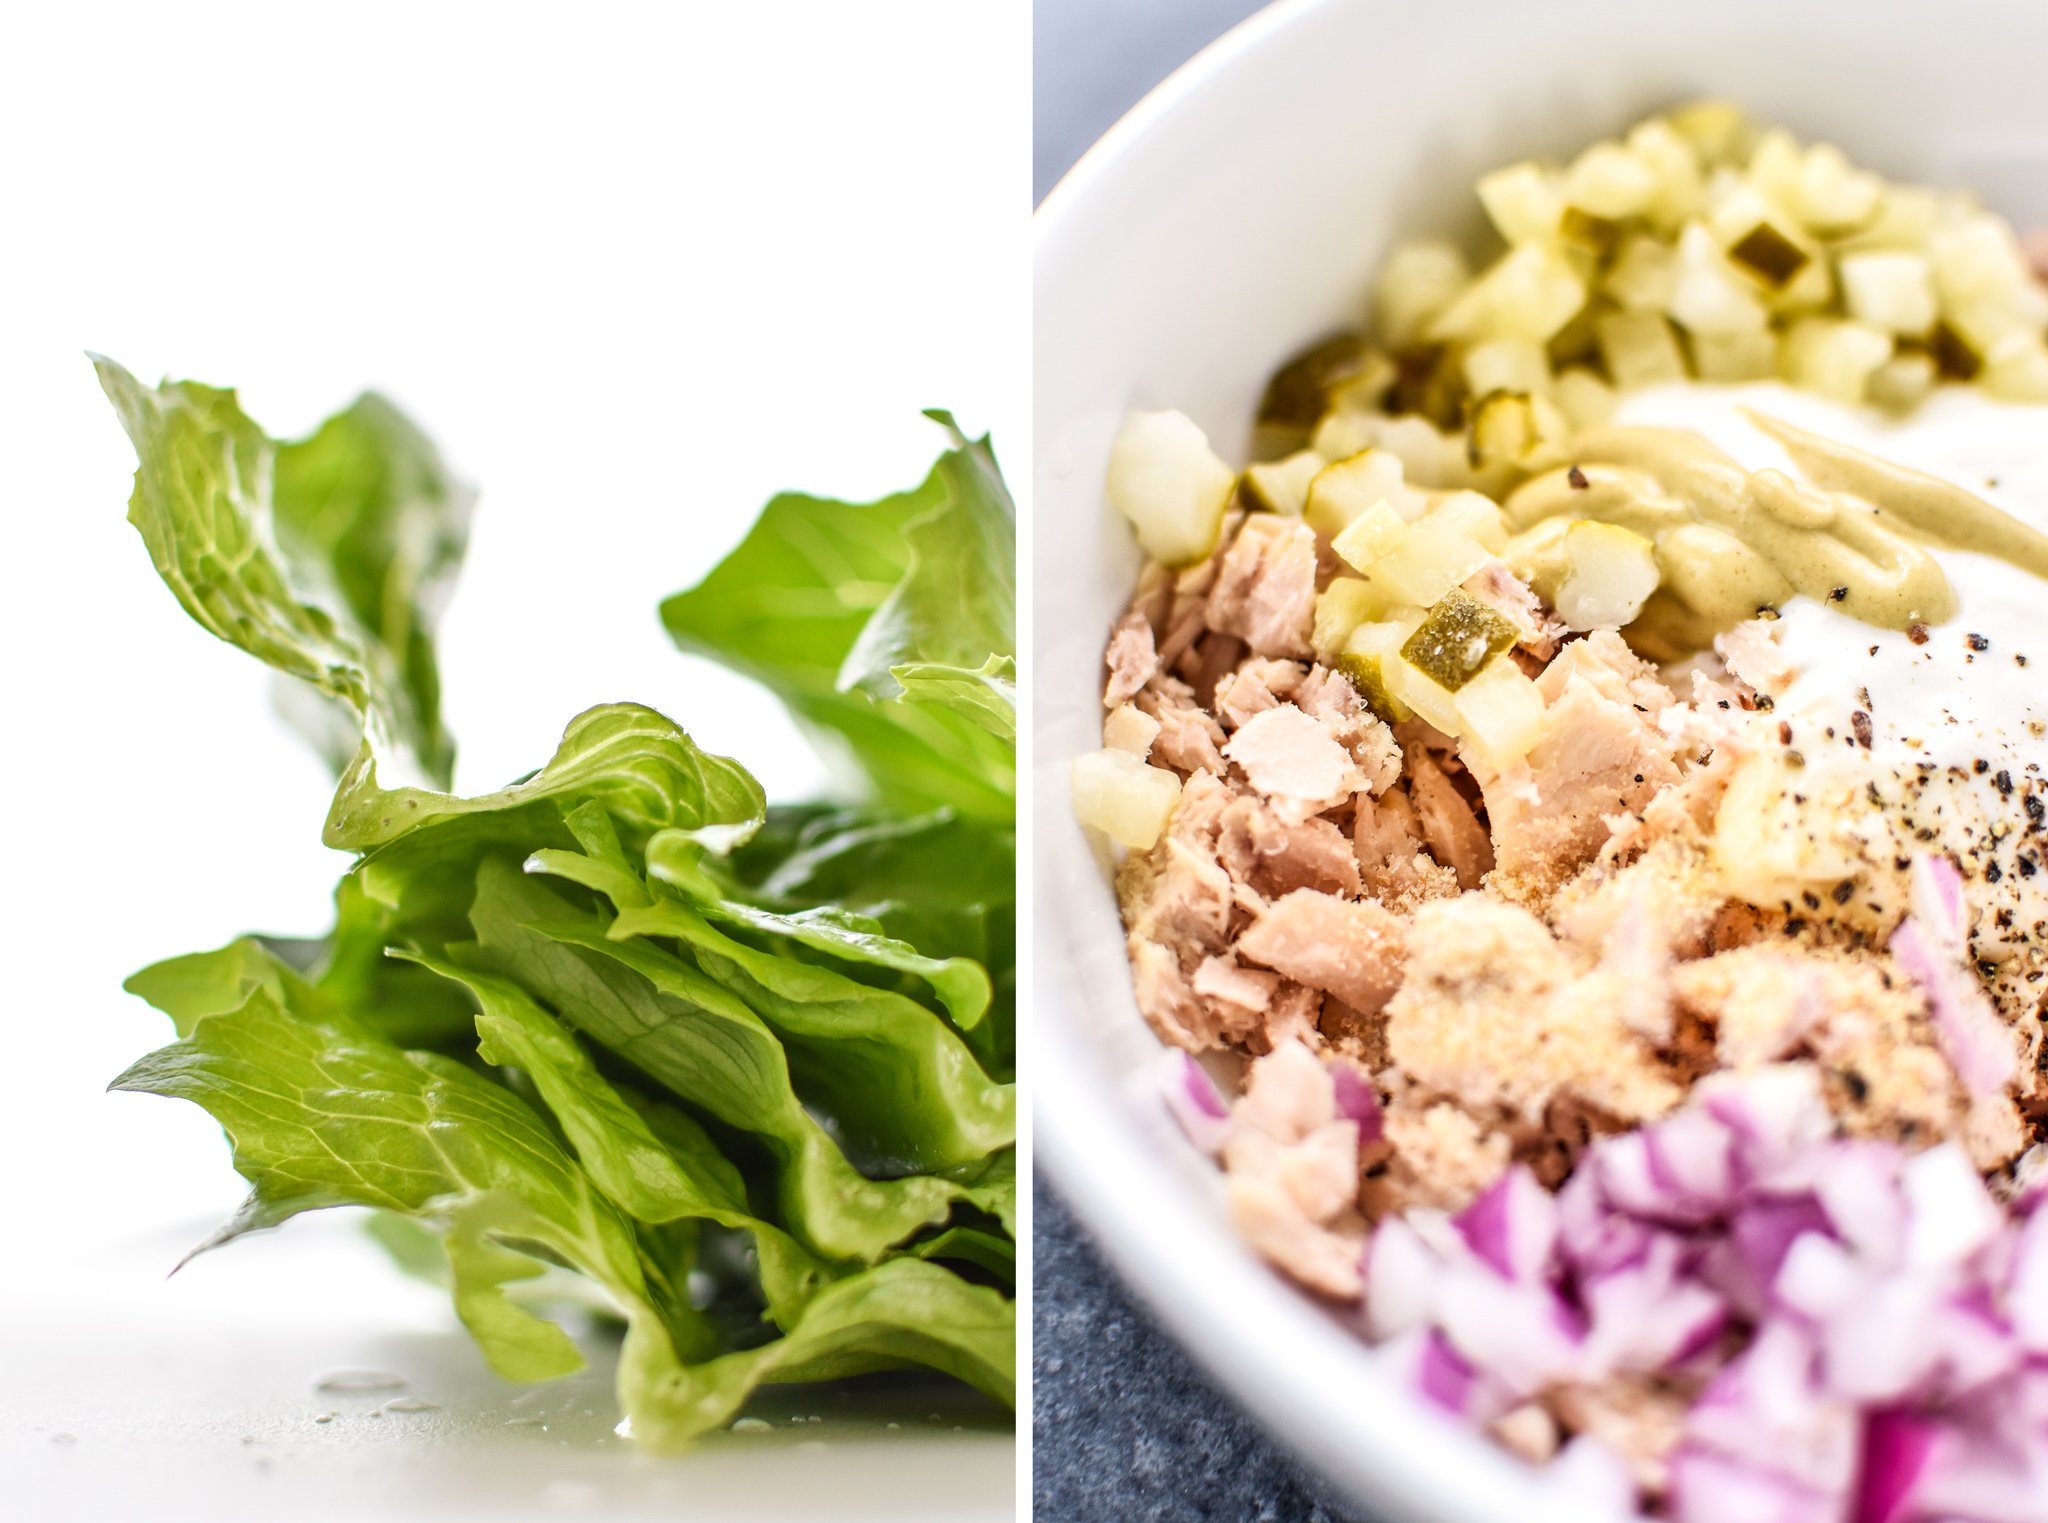 Left: Romaine lettuce laeves. RIght: Tuna Salad Lettuce Wraps Meal prep being prepared.